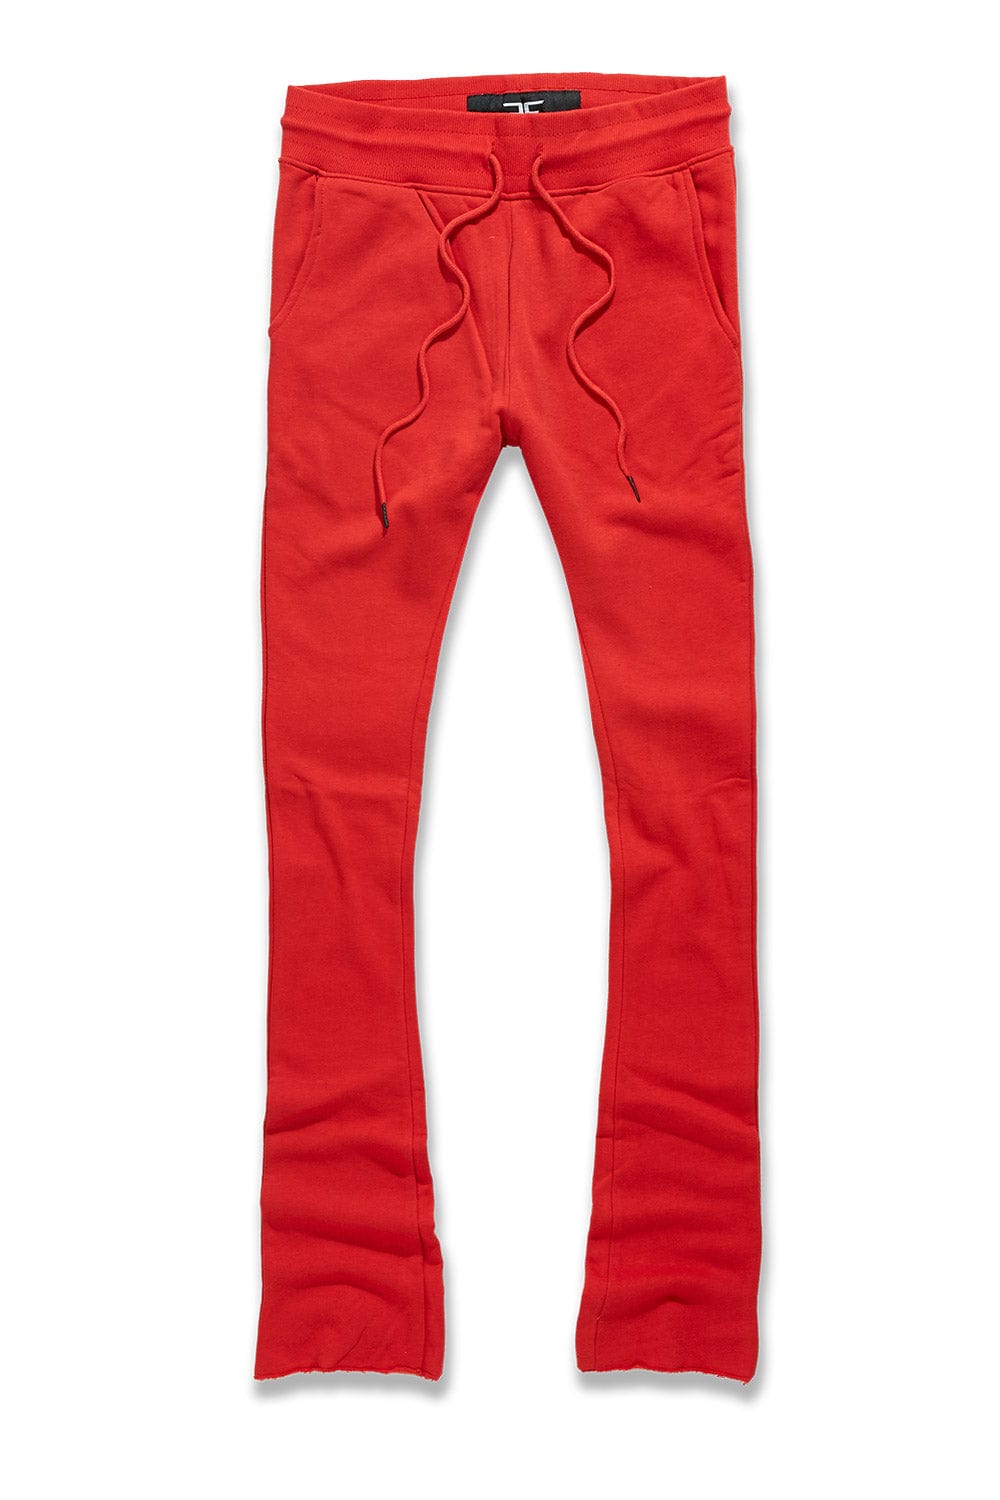 Jordan Craig Uptown Stacked Sweatpants (Red) Red / S